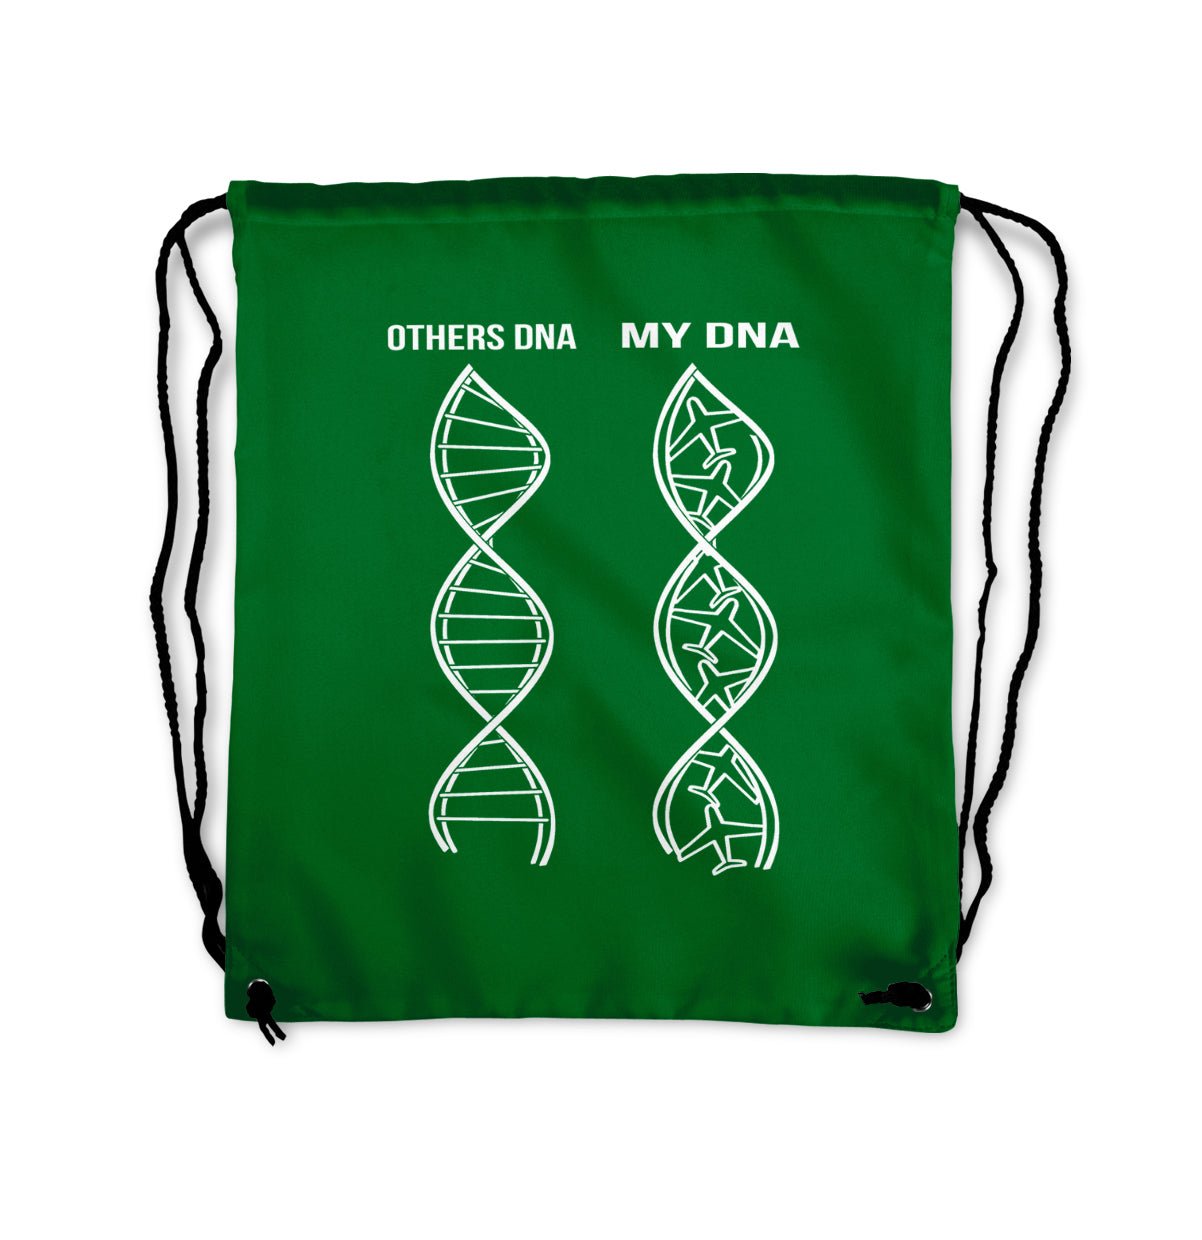 Aviation DNA Designed Drawstring Bags